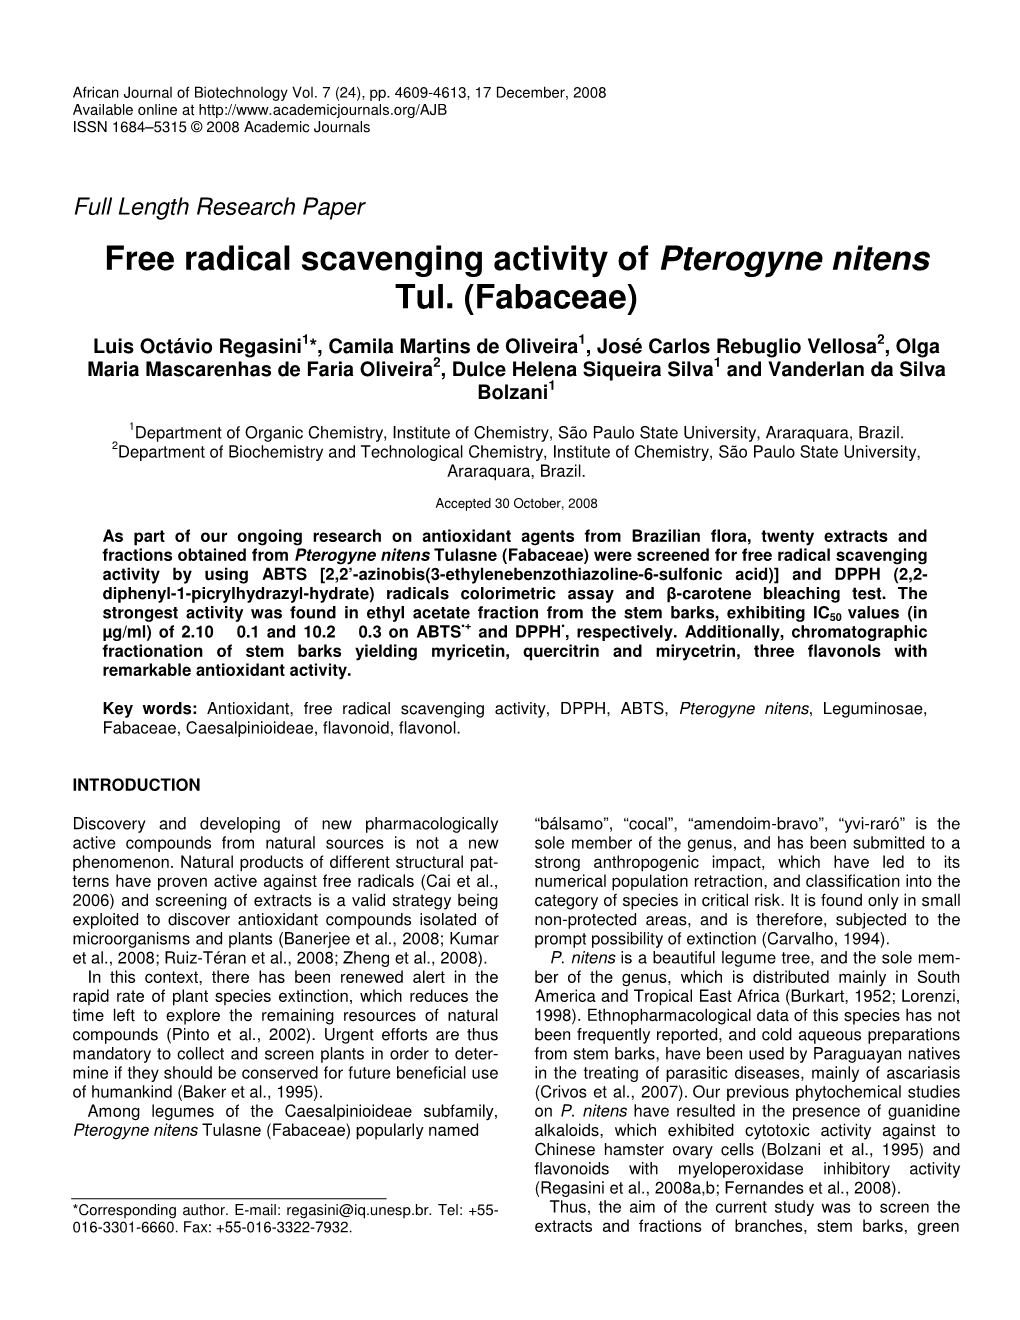 Free Radical Scavenging Activity of Pterogyne Nitens Tul. (Fabaceae)